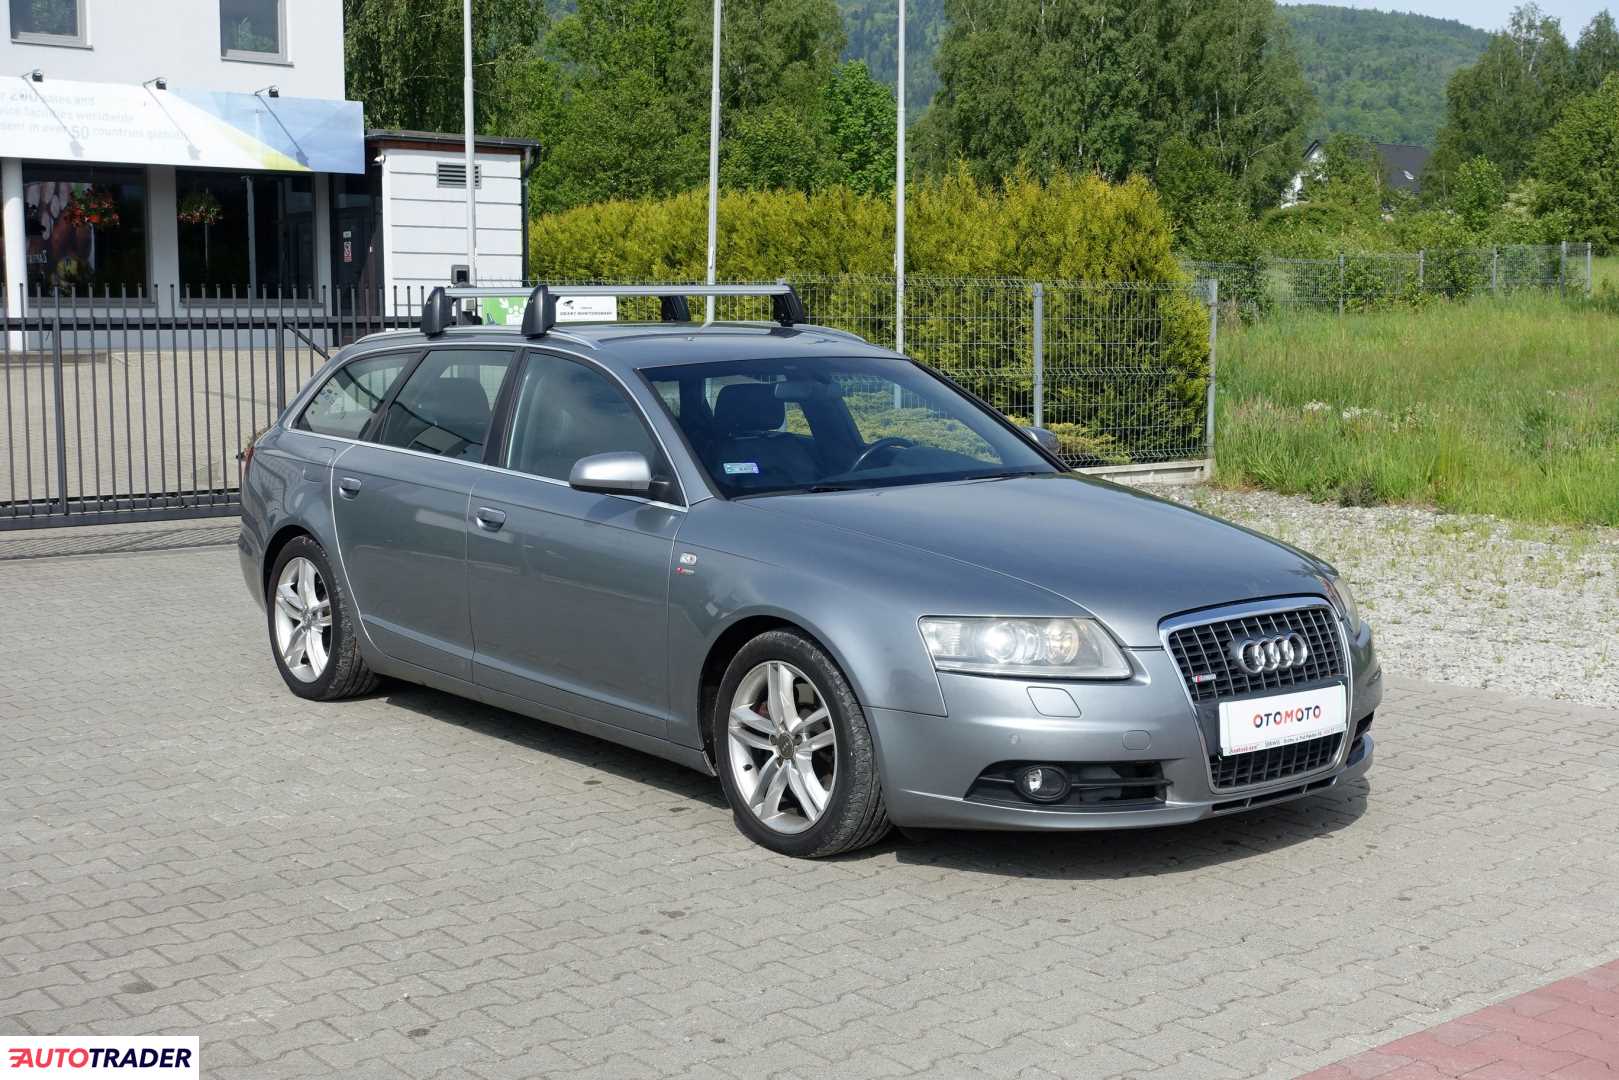 Audi A6 2009 3.0 233 KM